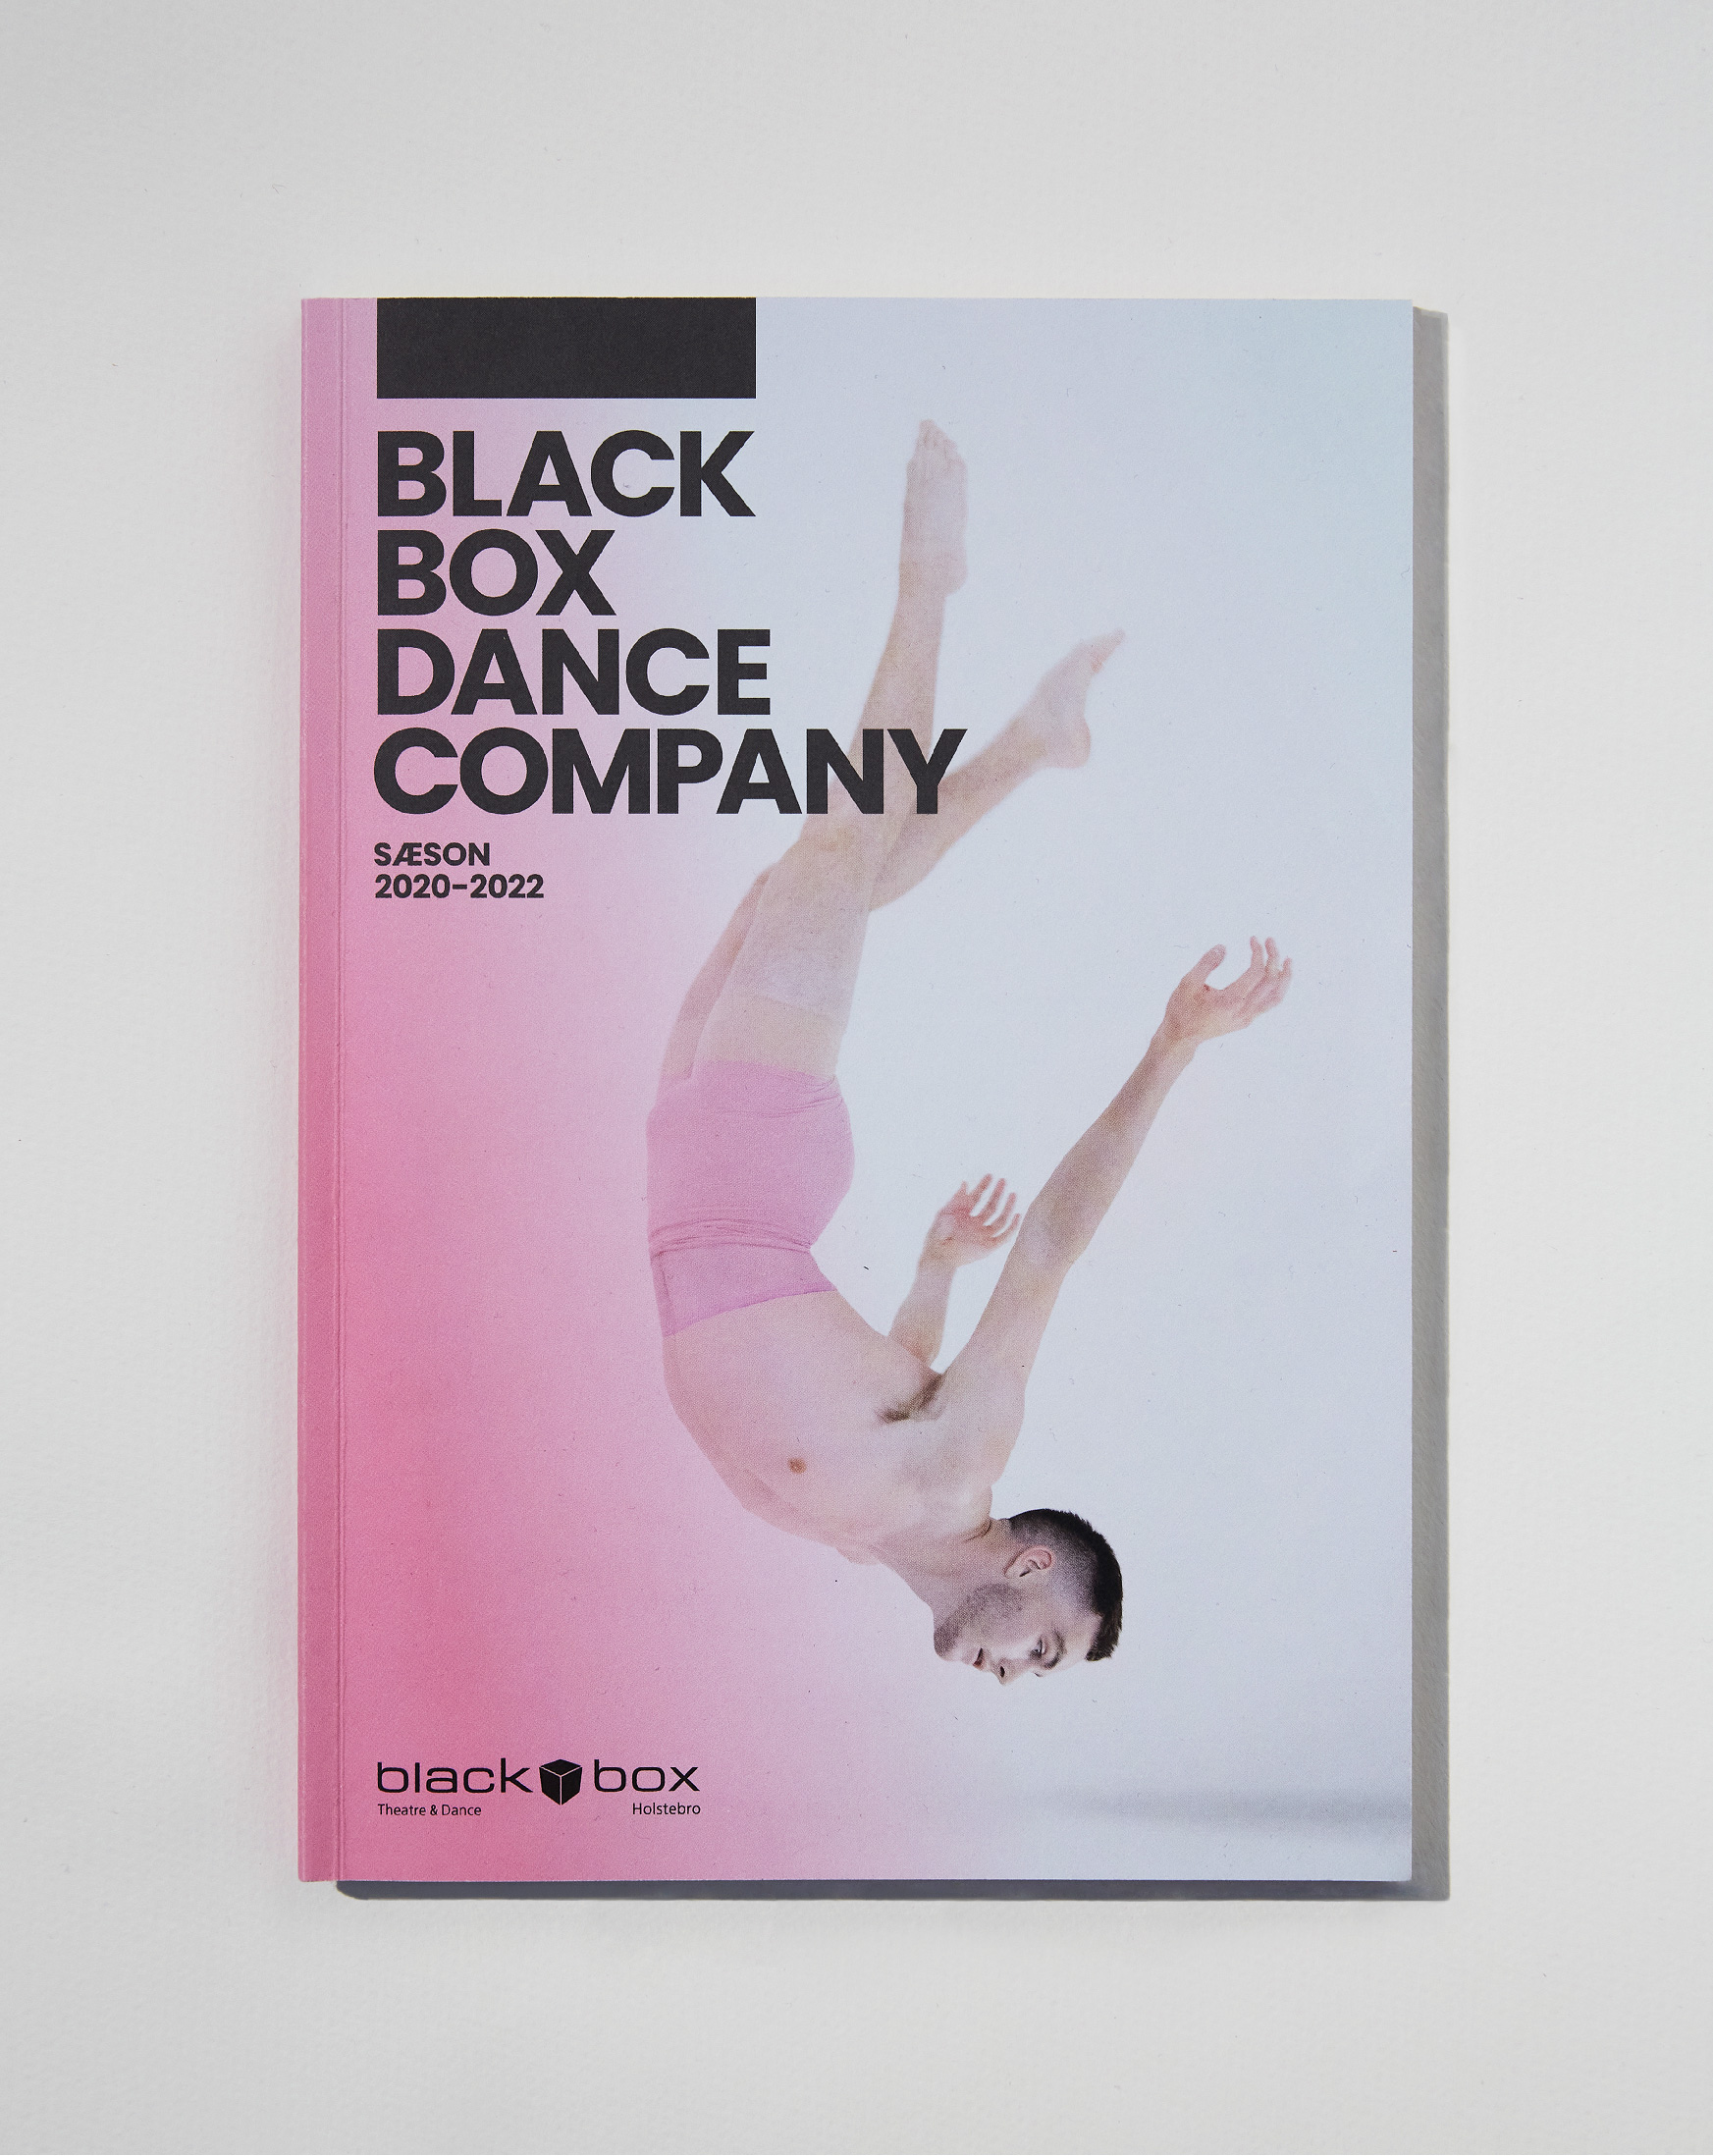 BLACK BOX DANCE COMPANY